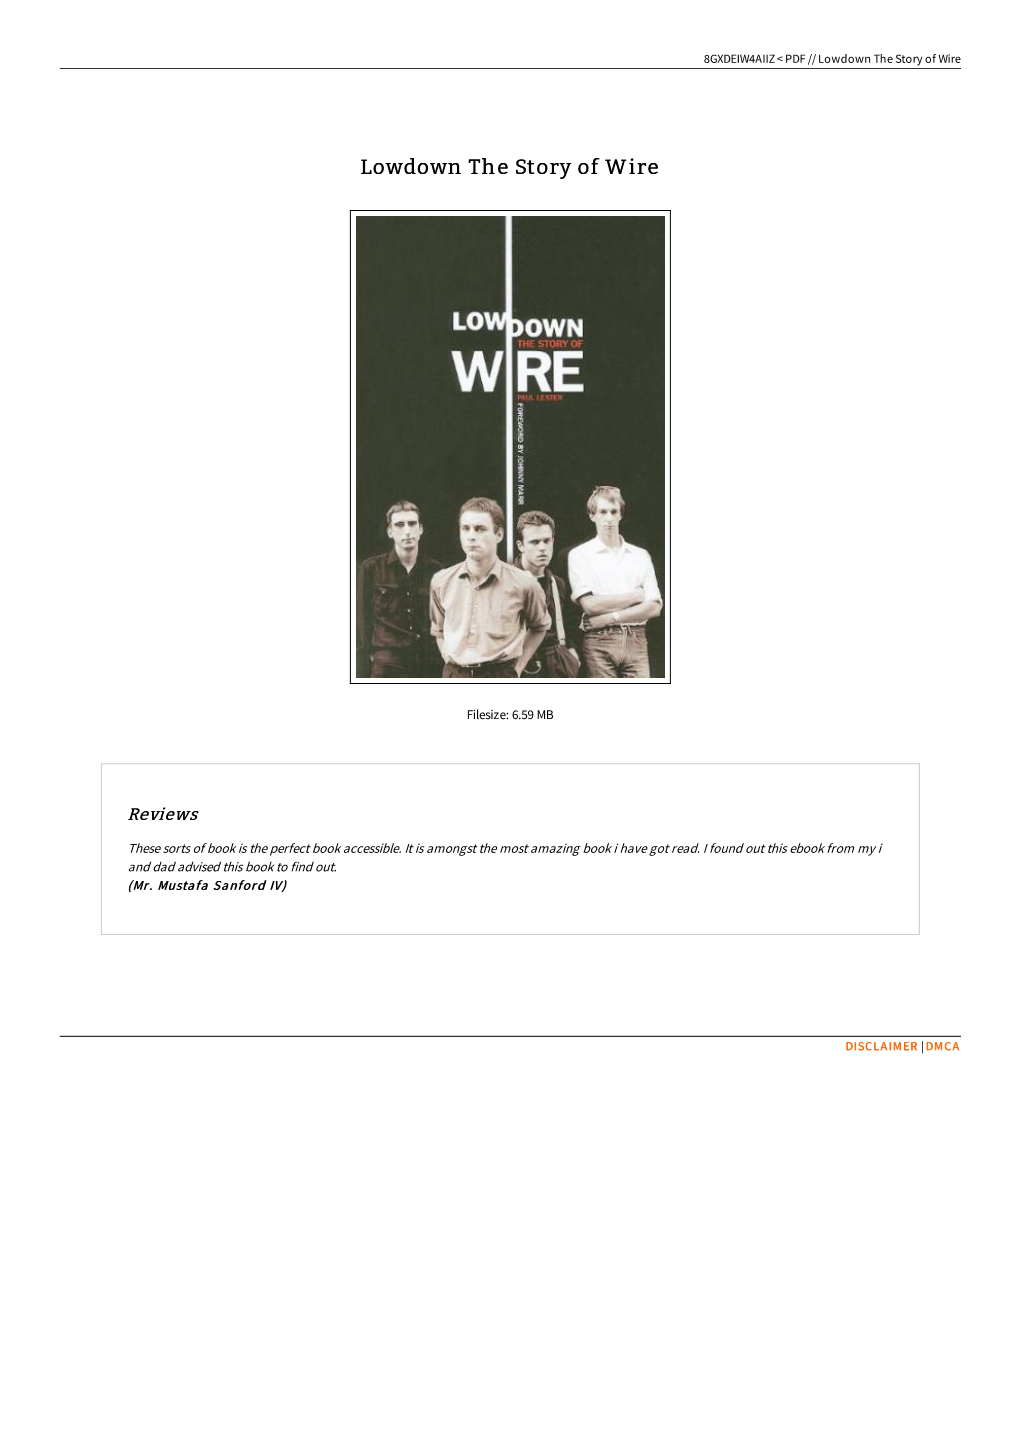 Read Book ^ Lowdown the Story of Wire « Z9TUVOUOCPFW